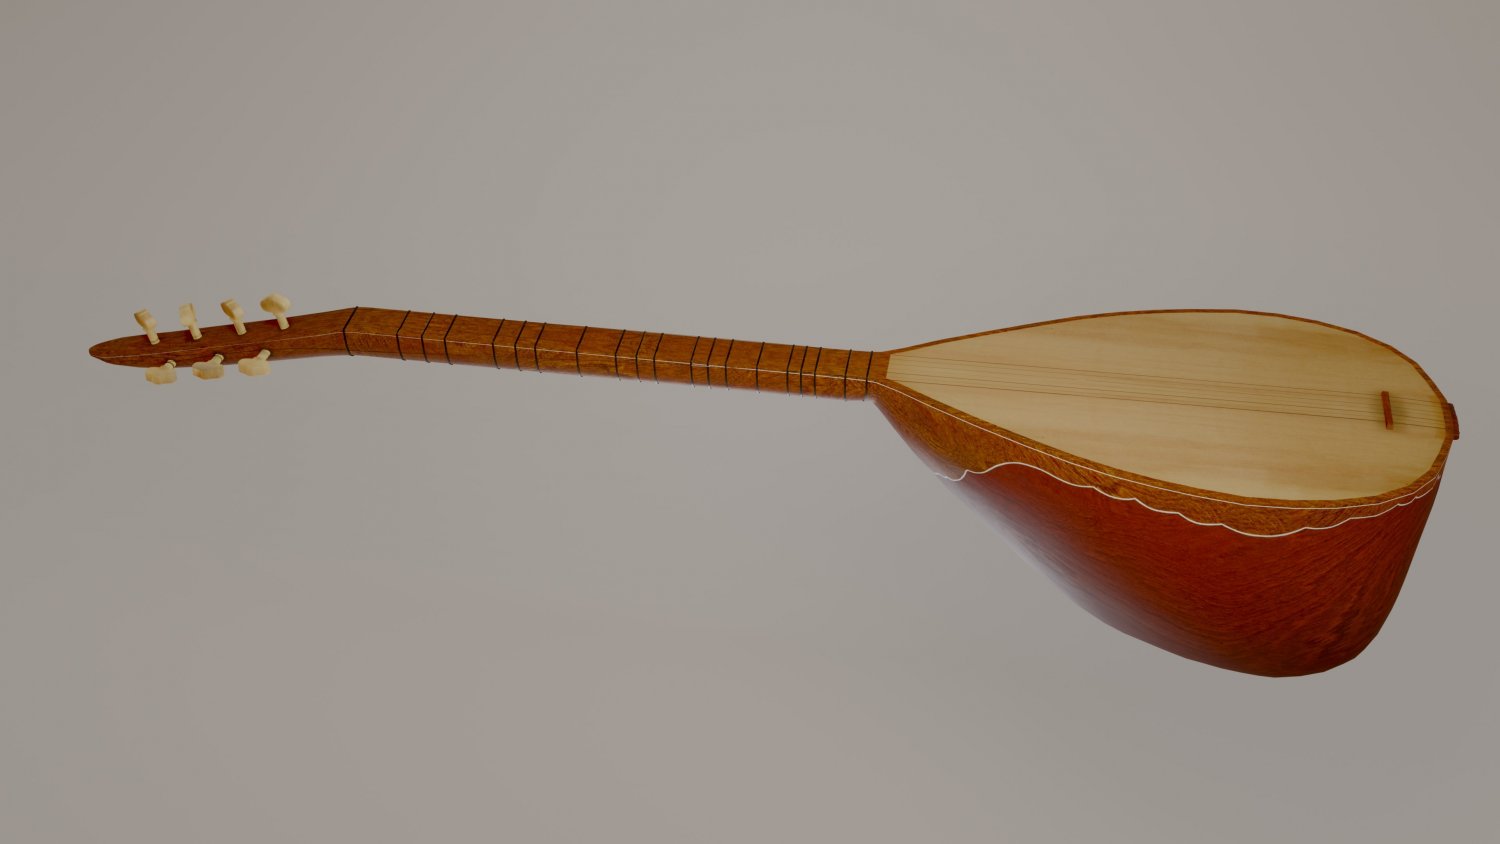 Saz baglama Instrument 3D Model in Guitar 3DExport